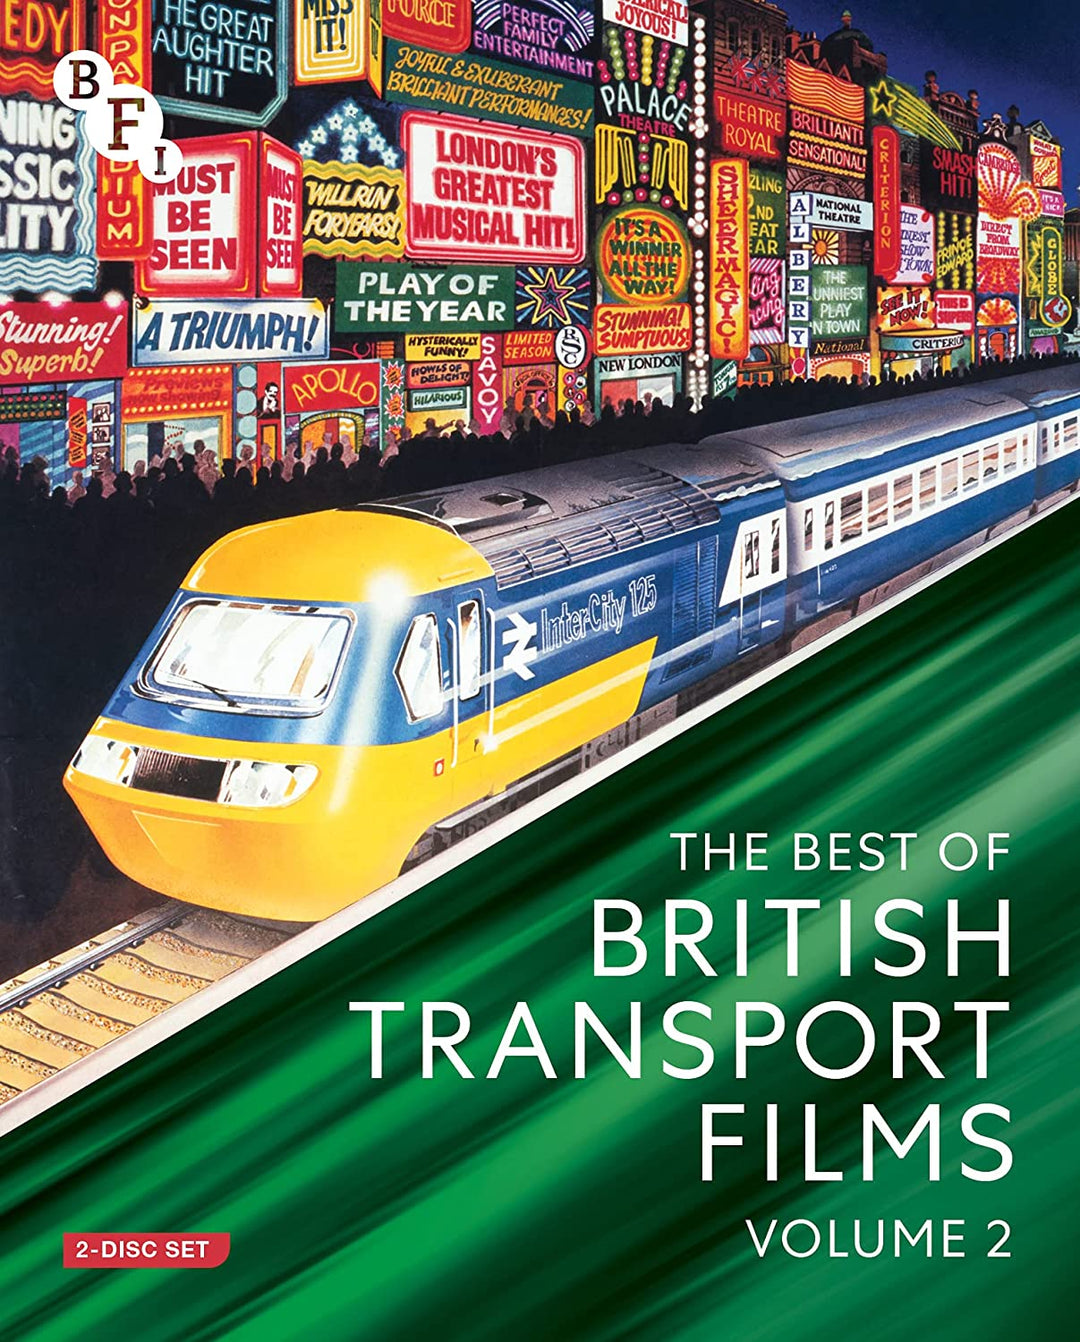 The Best of British Transport Films Volume 2 (2 discs) [Blu-ray]